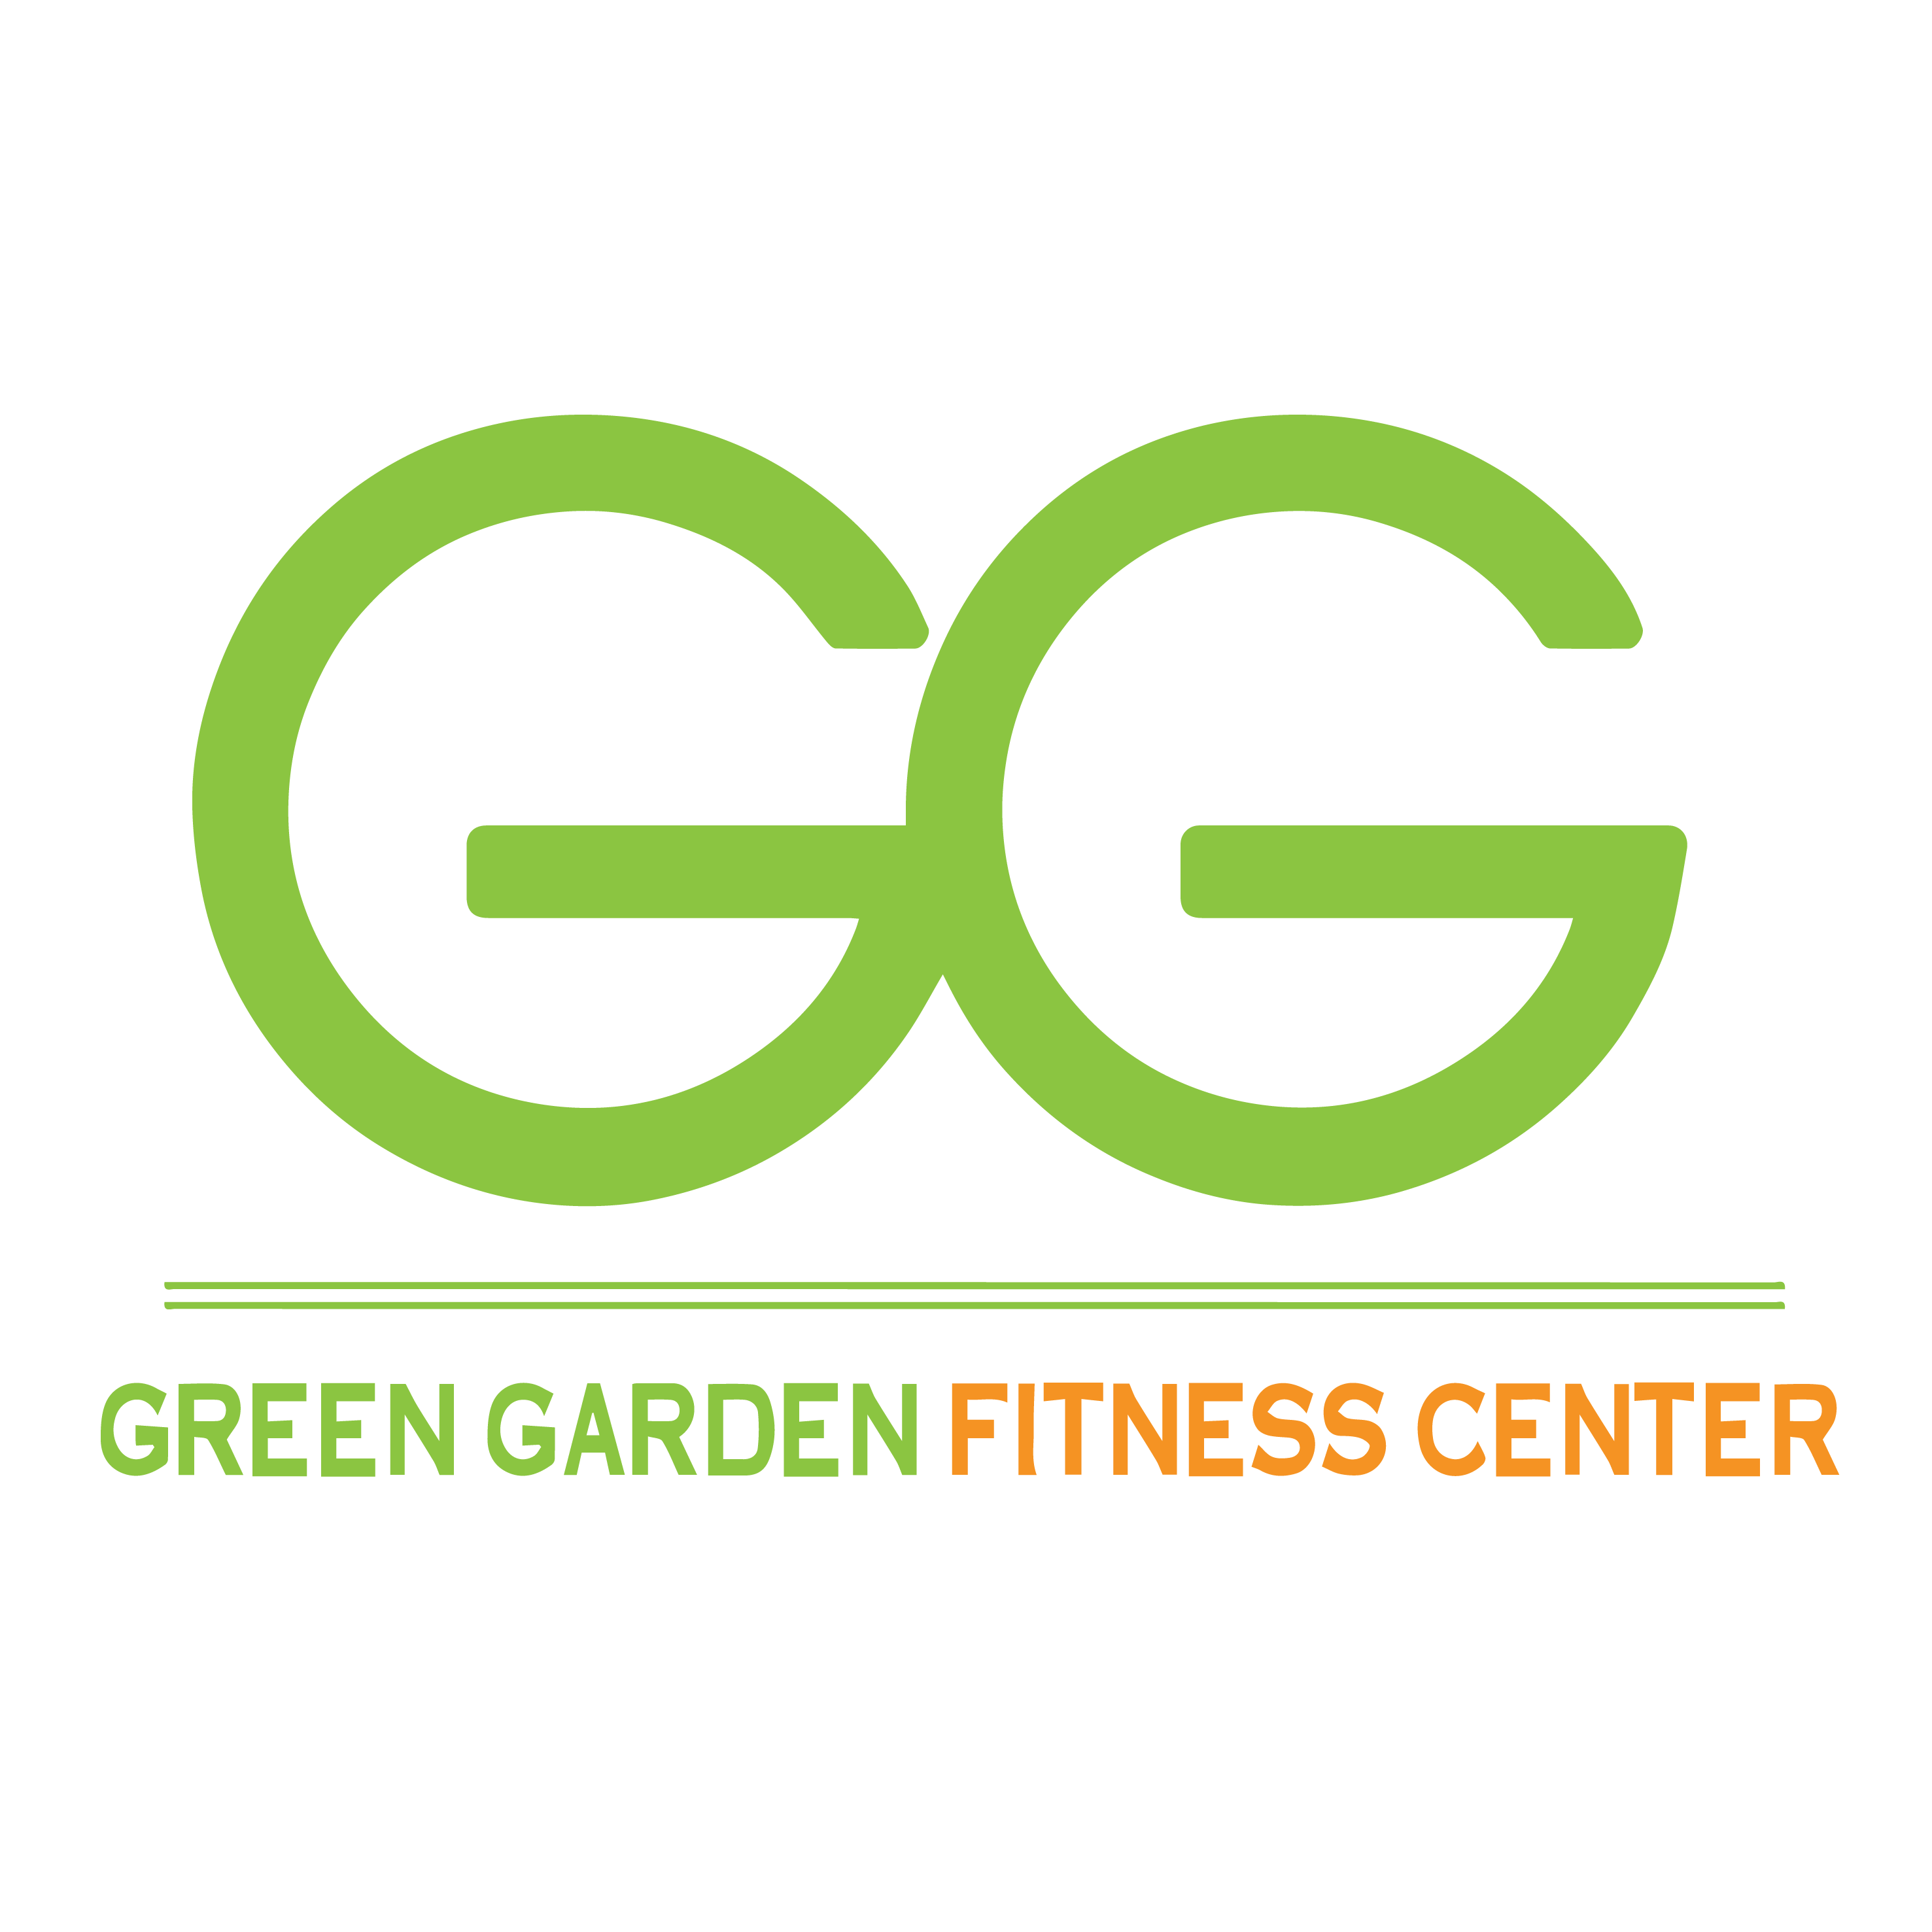 Green Garden Fitness Center- BSI DESIGN